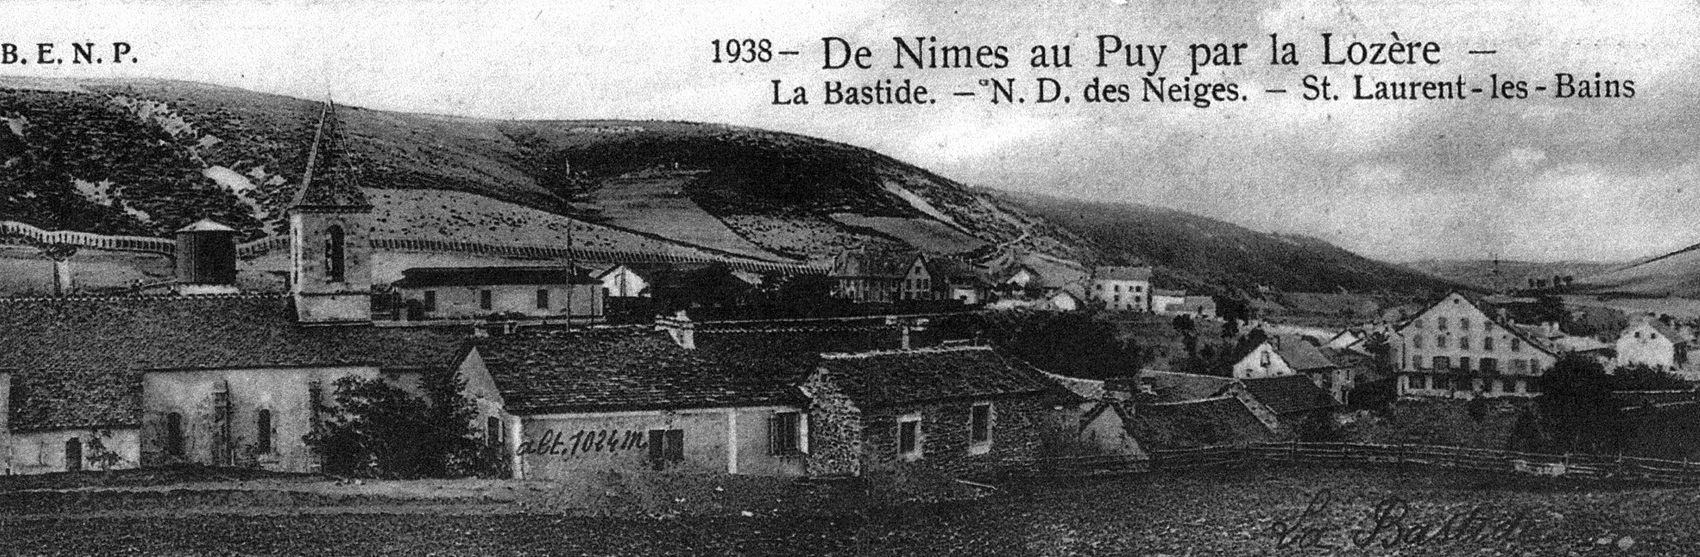 Der damalige Tourismus rund um La Bastide-Puylaurent